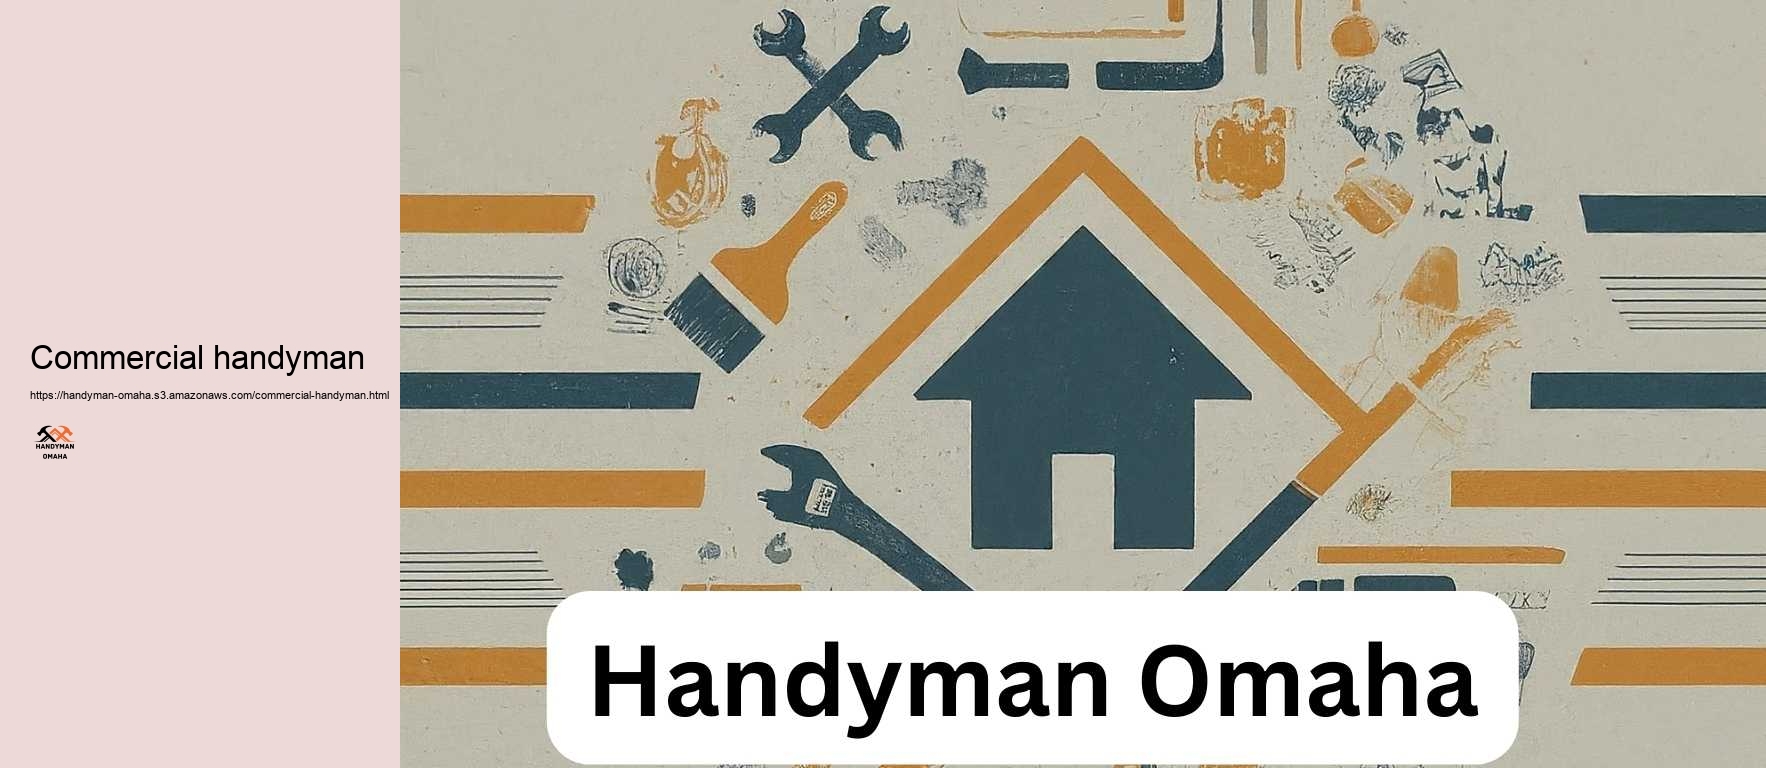 Commercial handyman